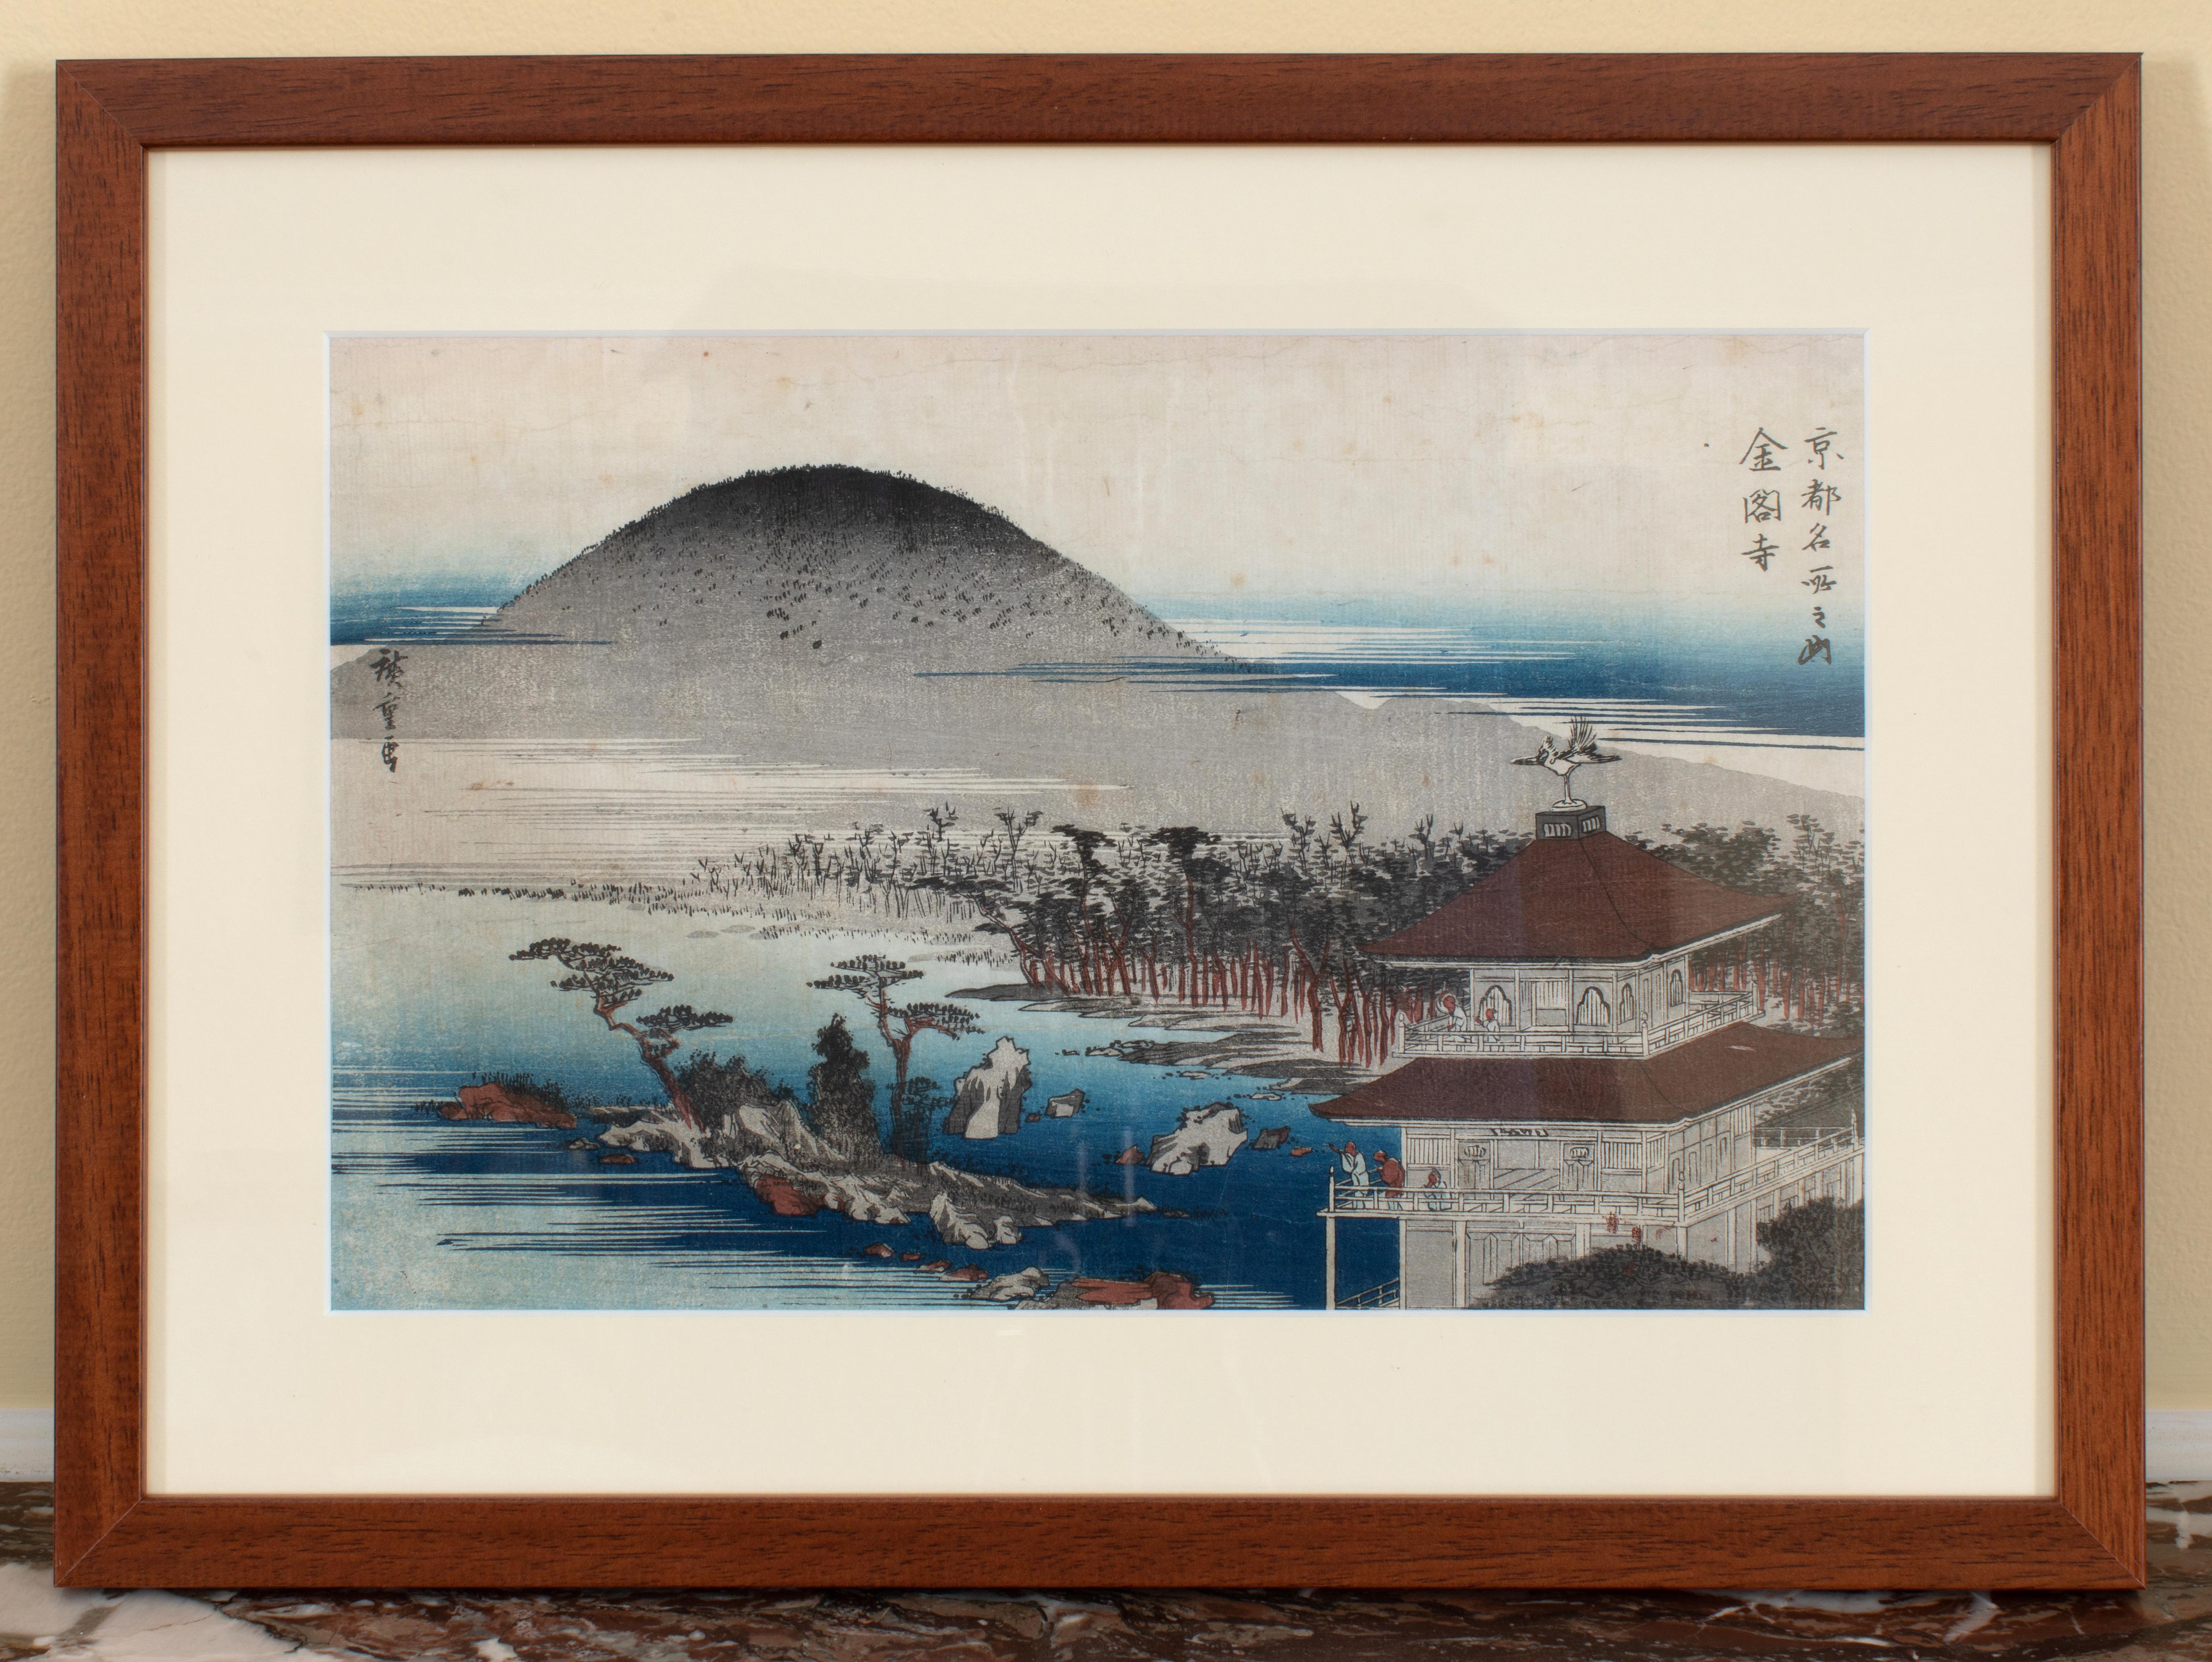 Kinkaku-ji (the Temple of the Golden Pavilion) - Print by Utagawa Hiroshige (Ando Hiroshige)